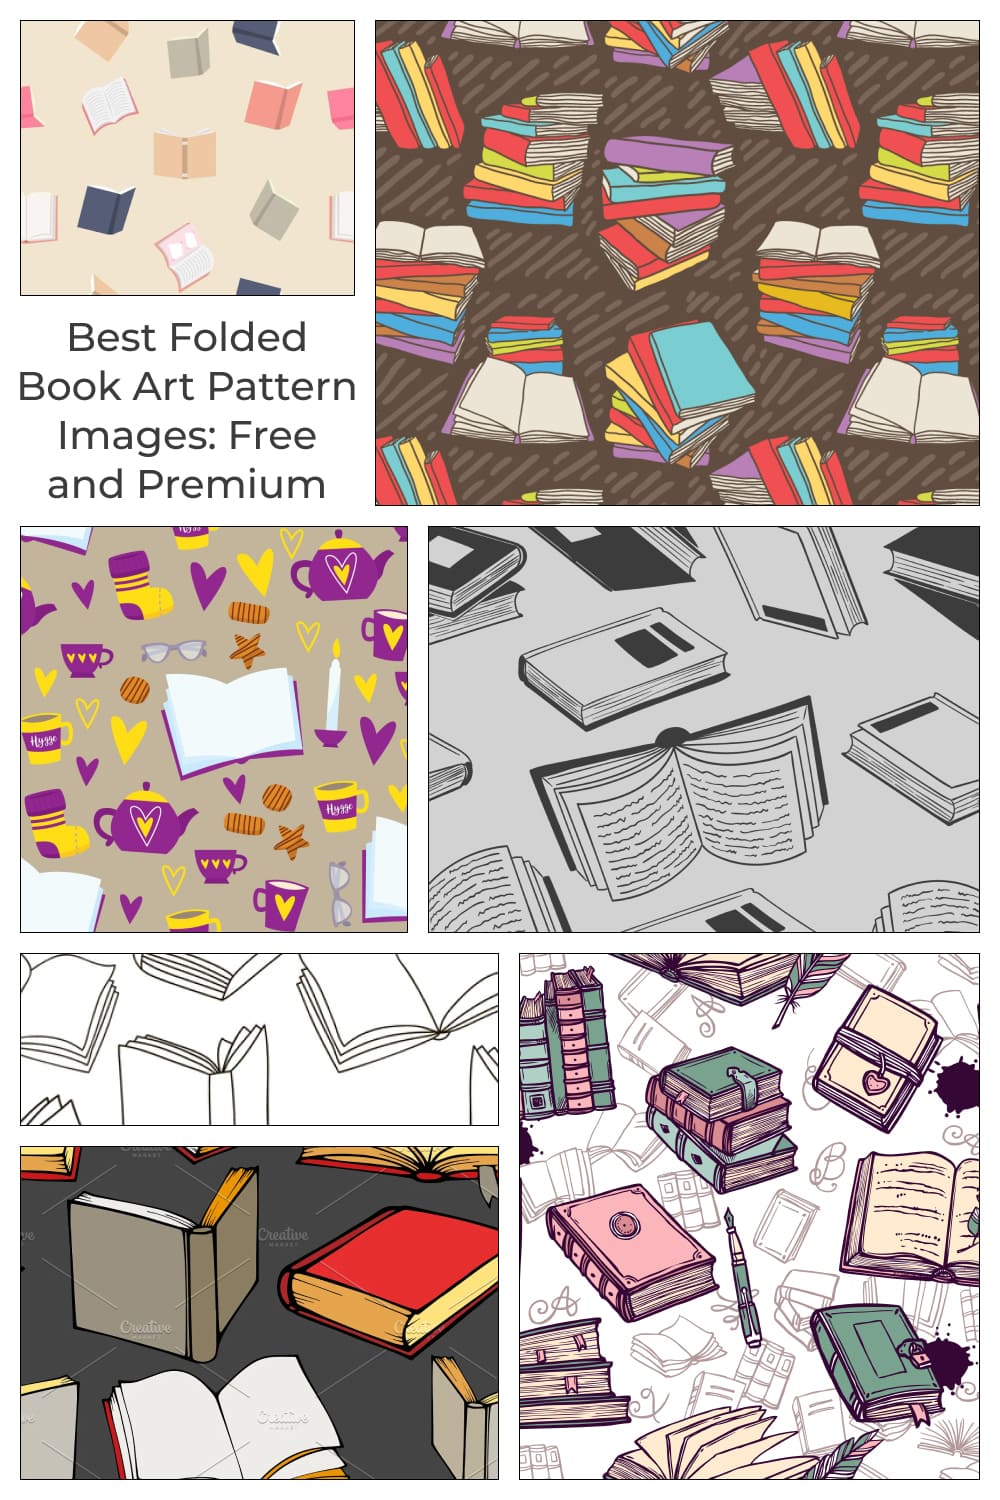 Folded Book Art Pattern Pinterest.